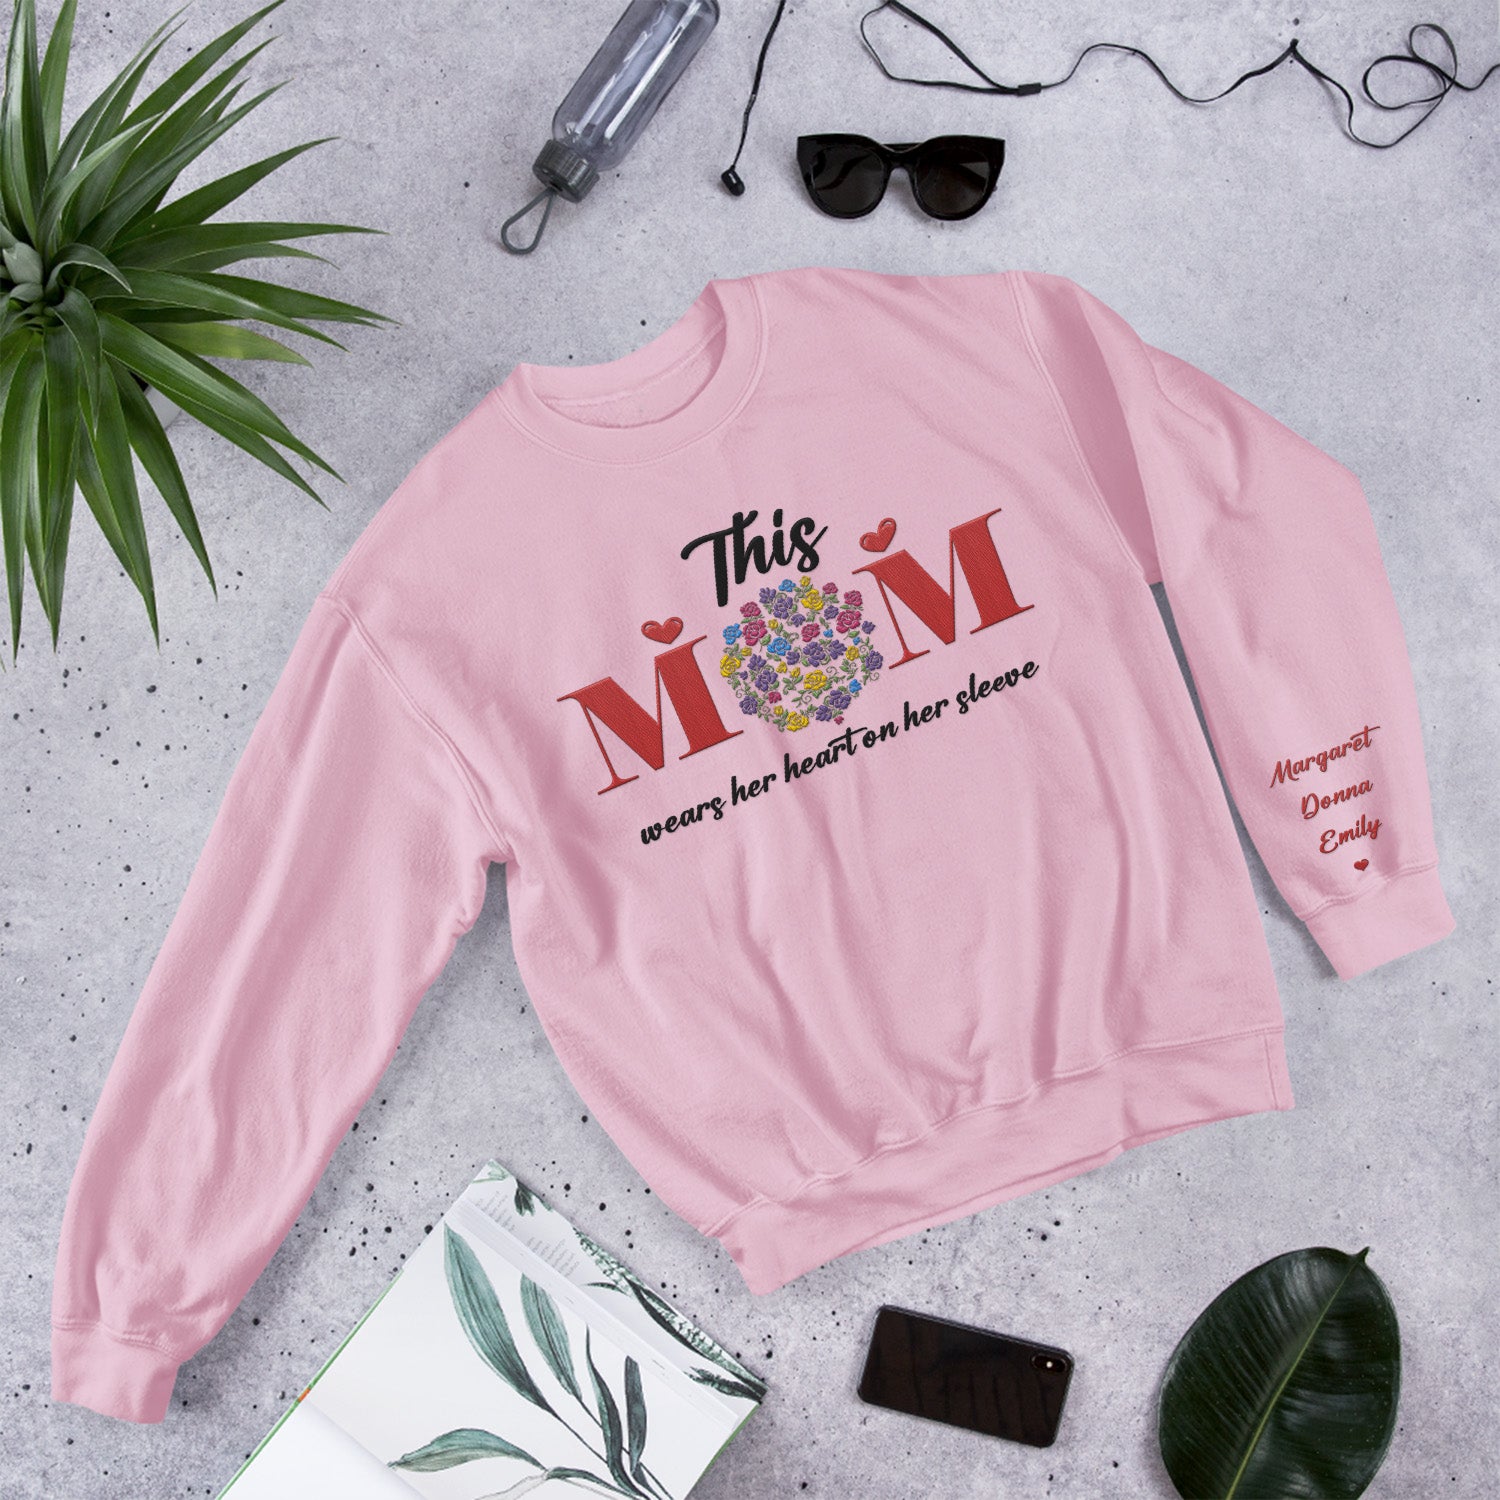 Mom Floral Embroidered Sweatshirt SWE09